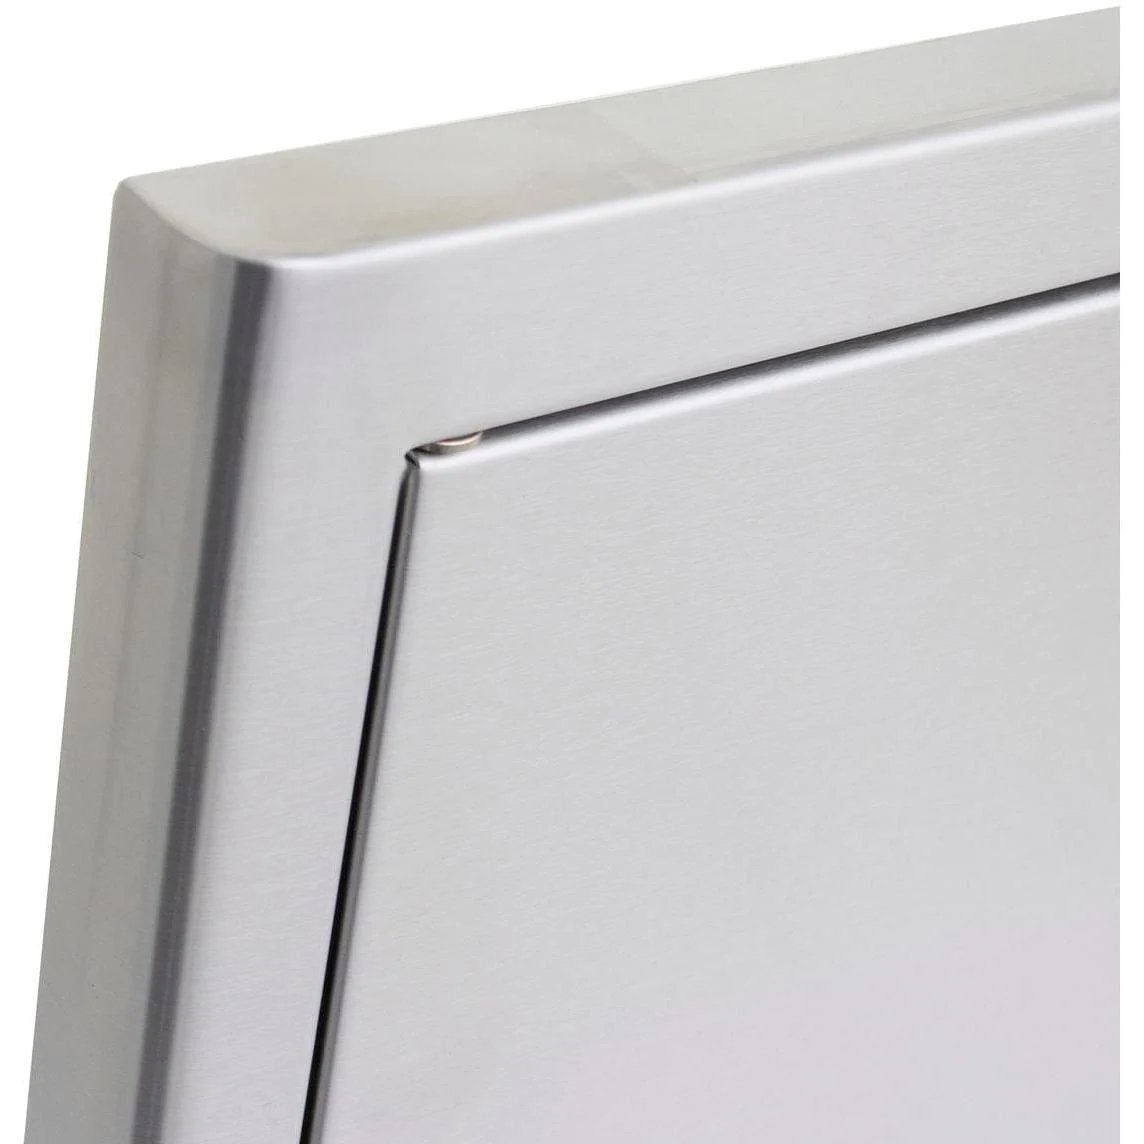 Blaze 32-Inch Access Door & Stainless Steel Double Drawer Combo - BLZ-DDC-R